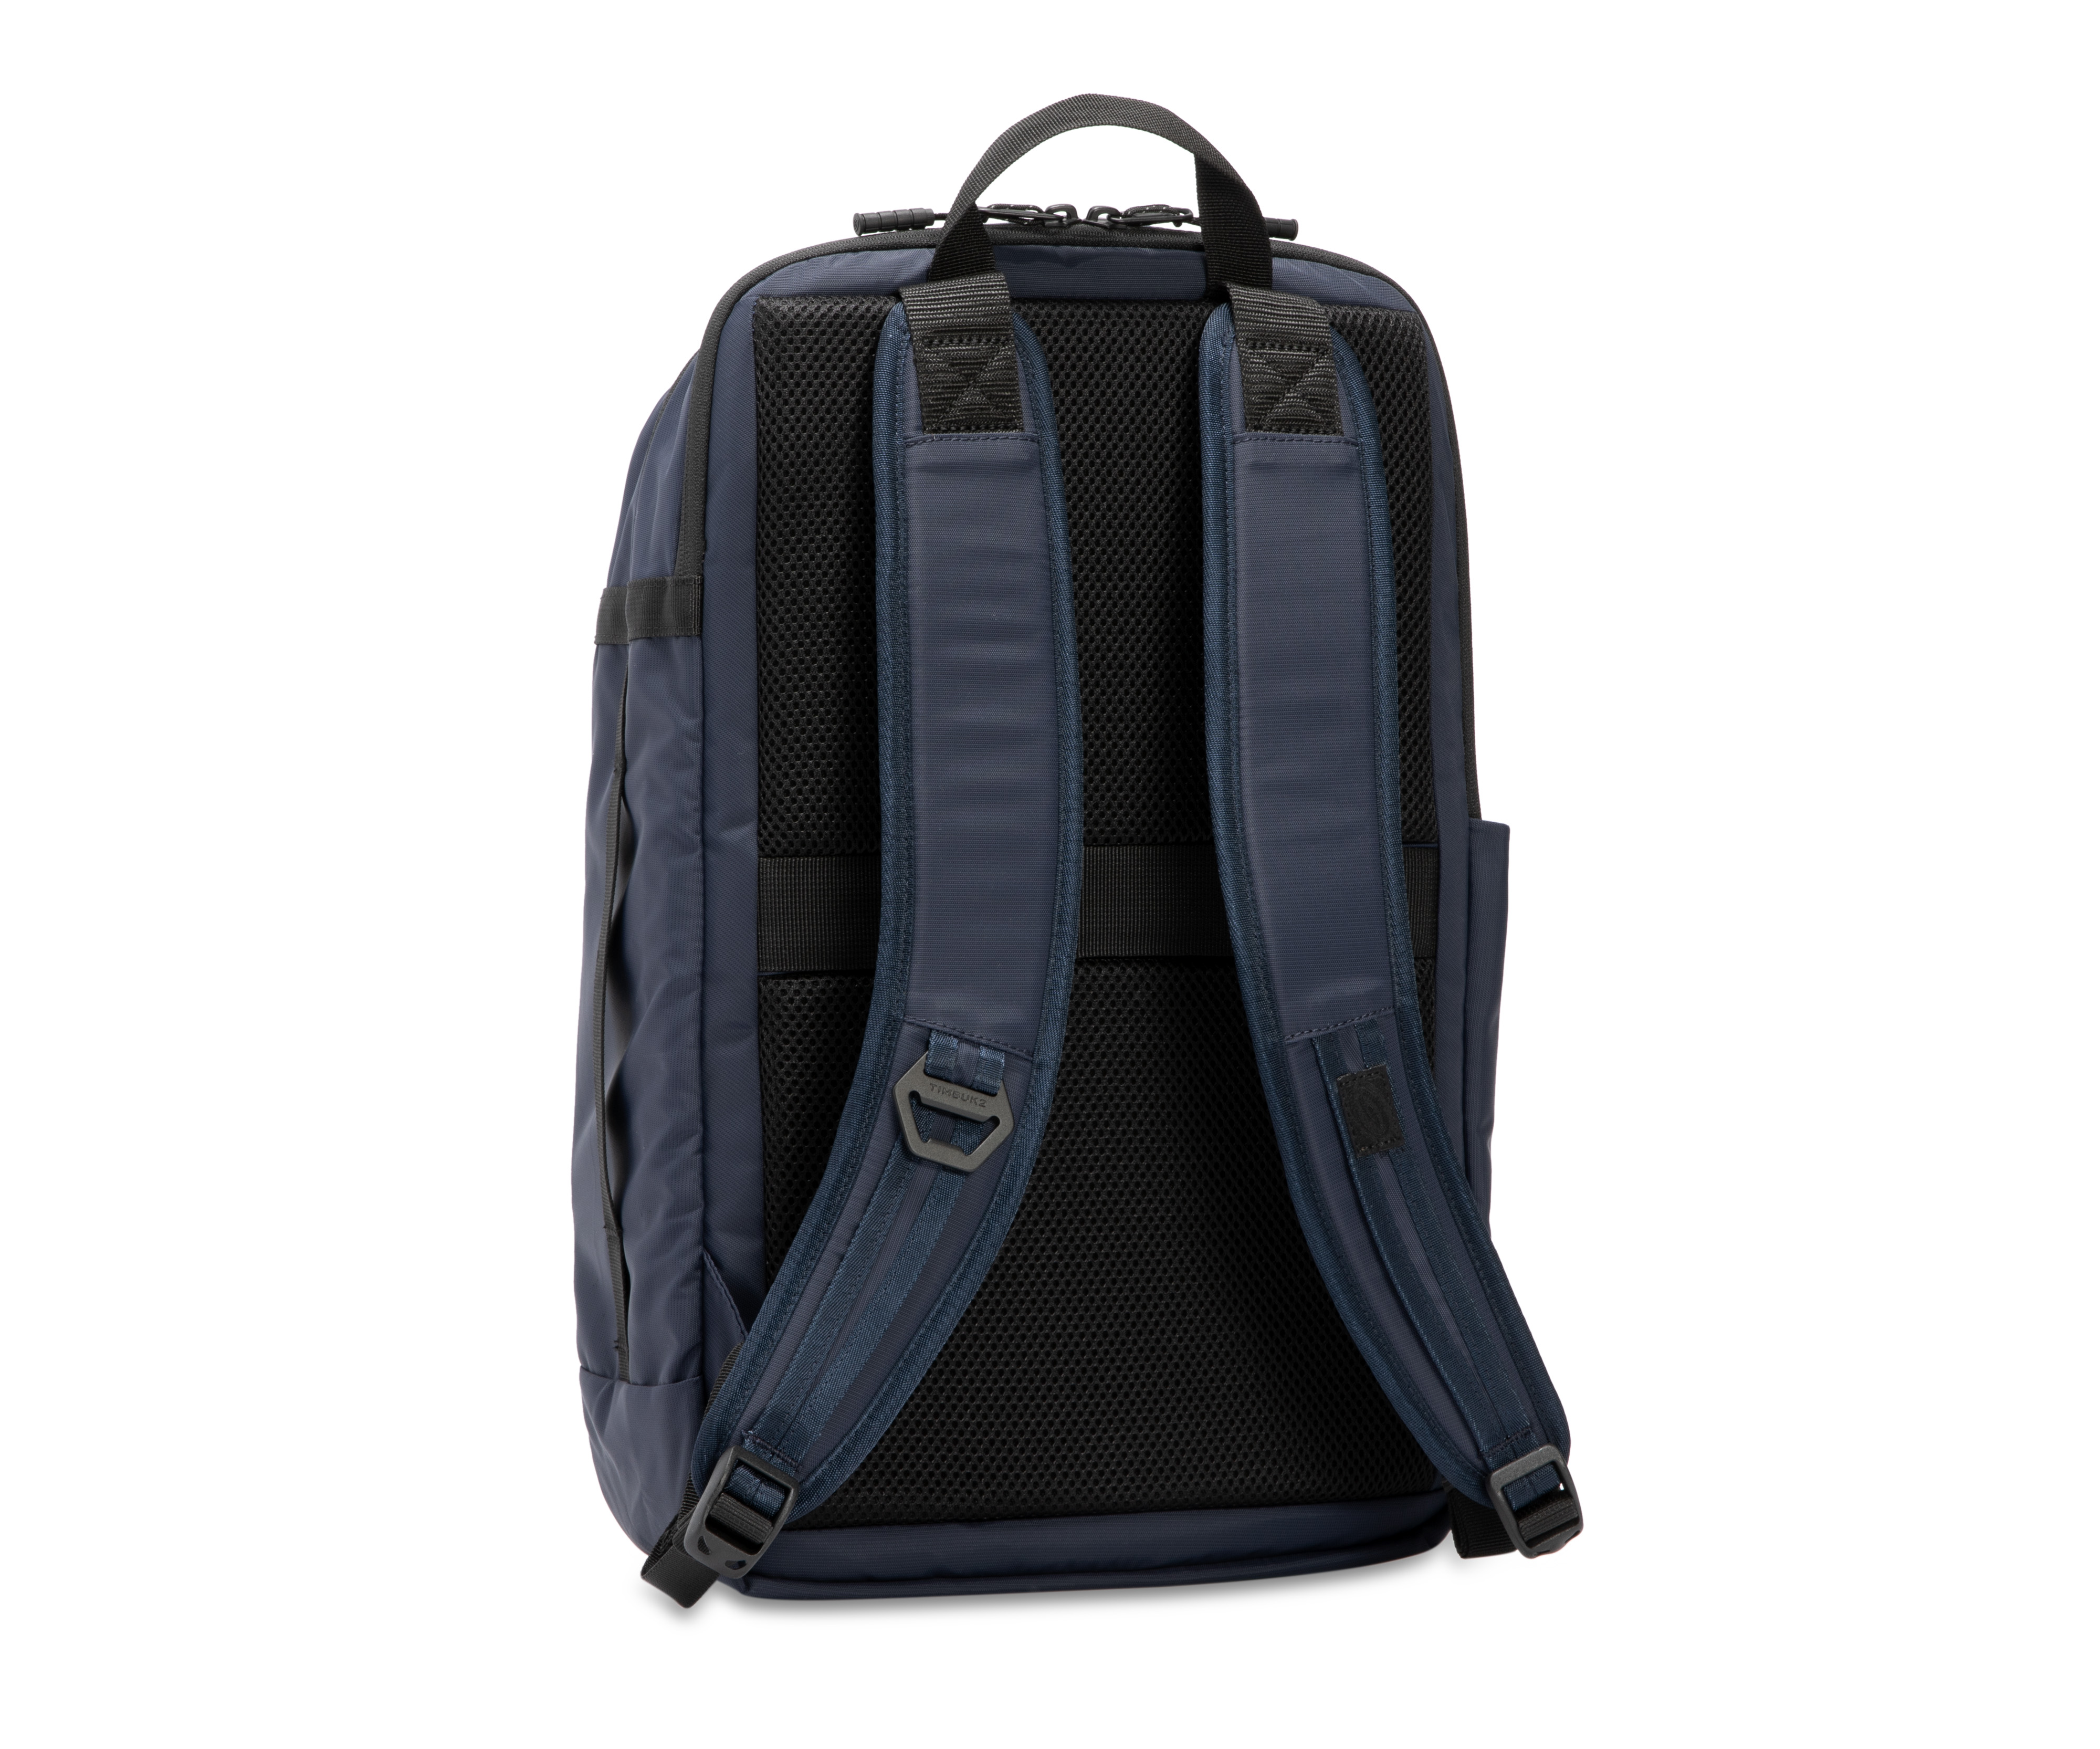 Timbuk2 Q Laptop Backpack 2.0 | eBay